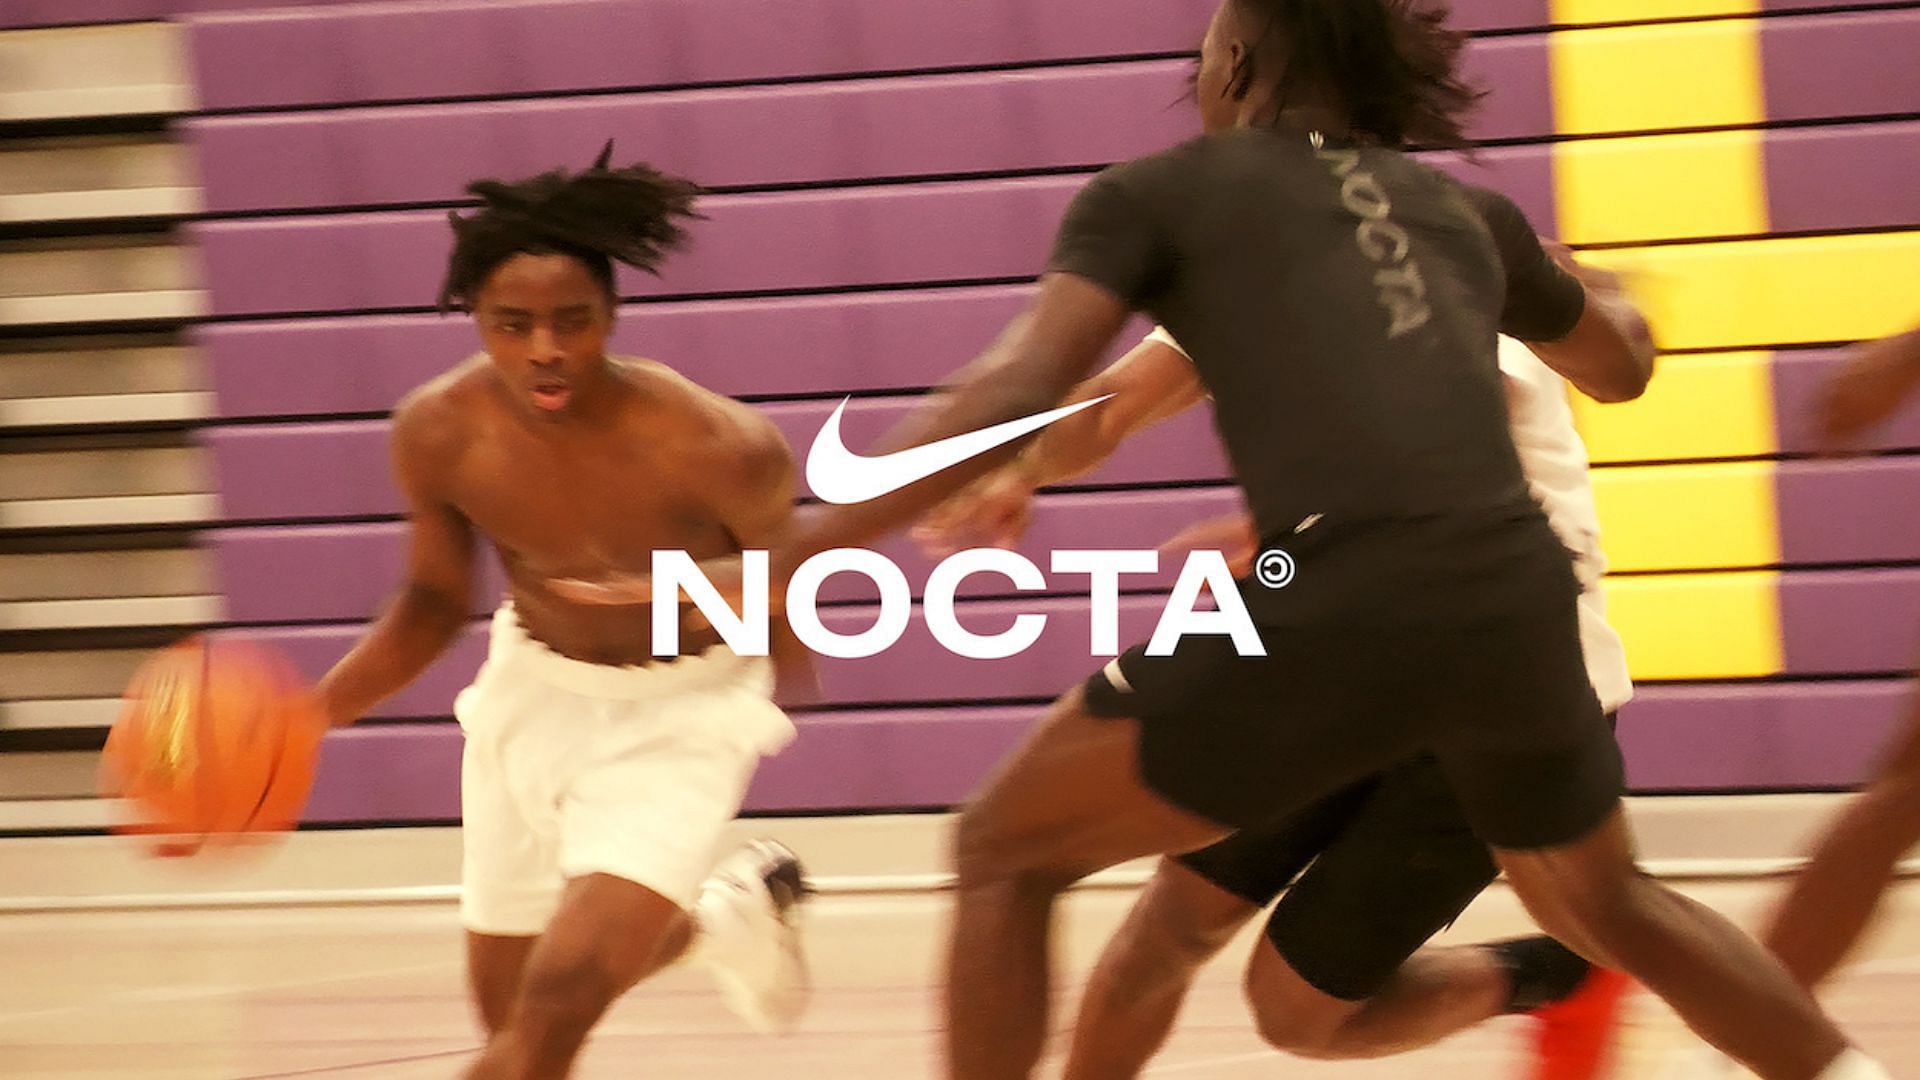 Where to buy Drake's NOCTA x Nike basketball collection? Price